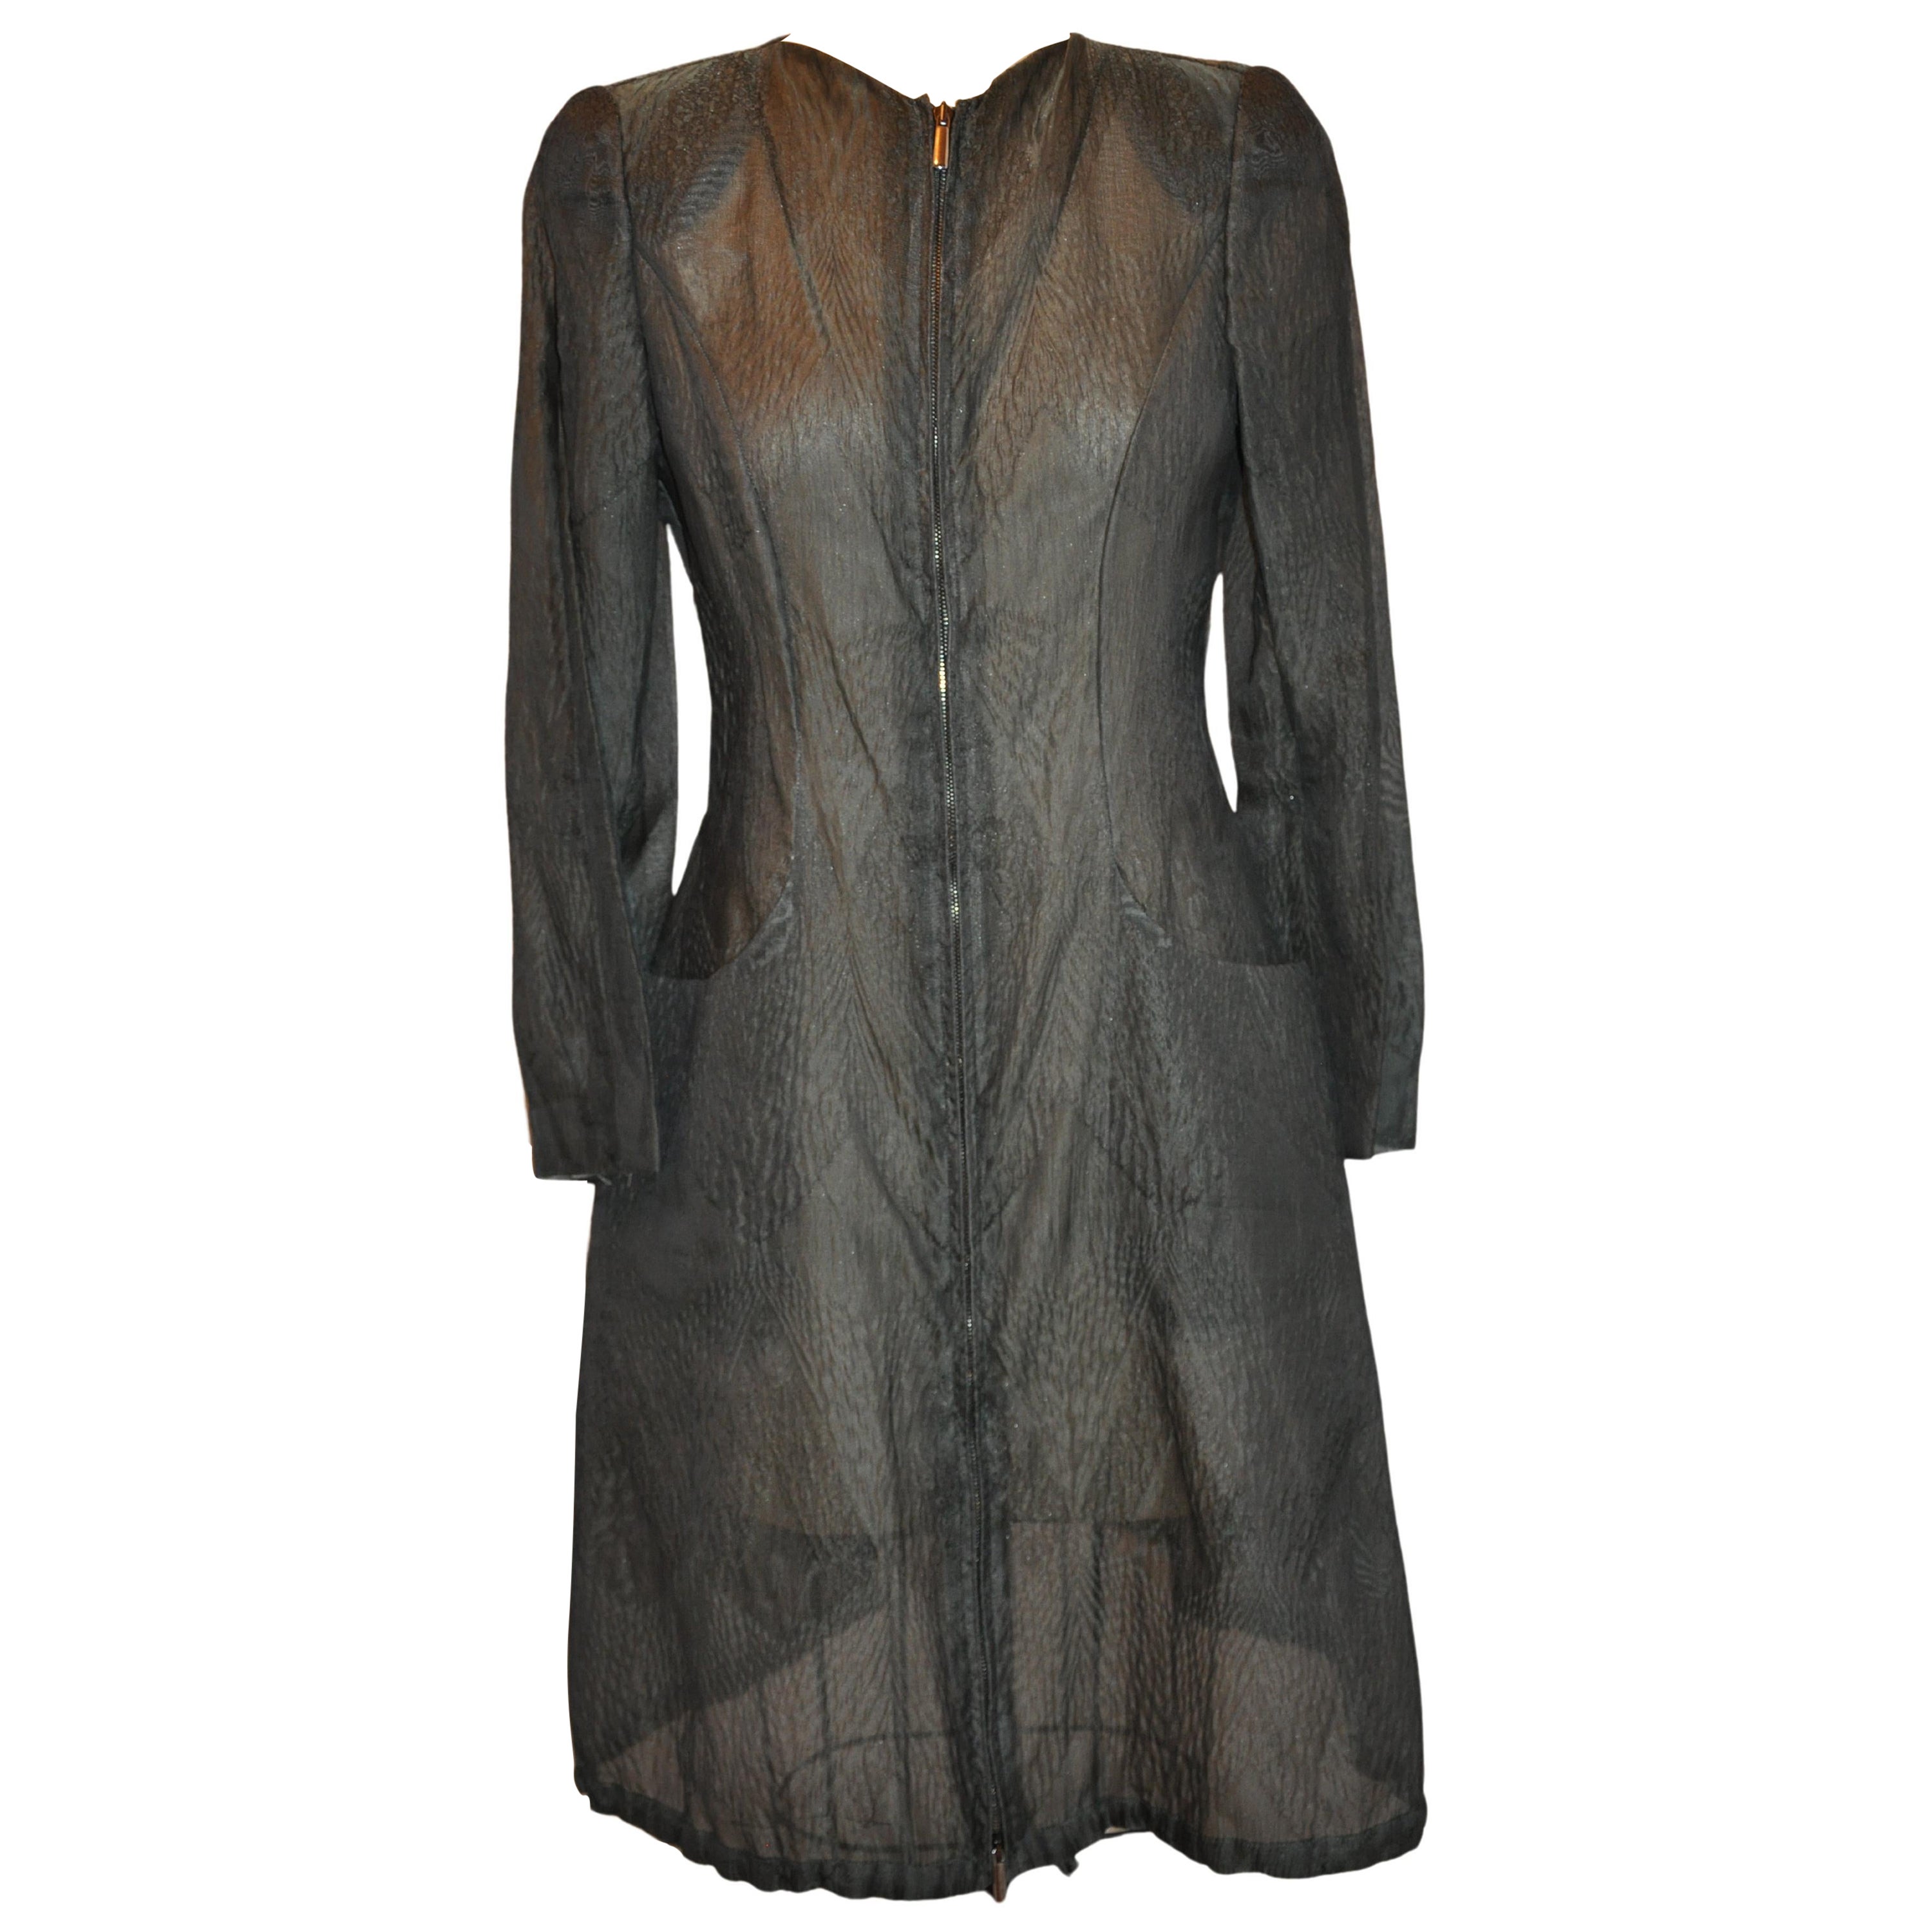 Georgio Armani 'Black Label' Waldgrünes Kleid/Mantel aus Seidentaft mit 2 Reißverschlüssen